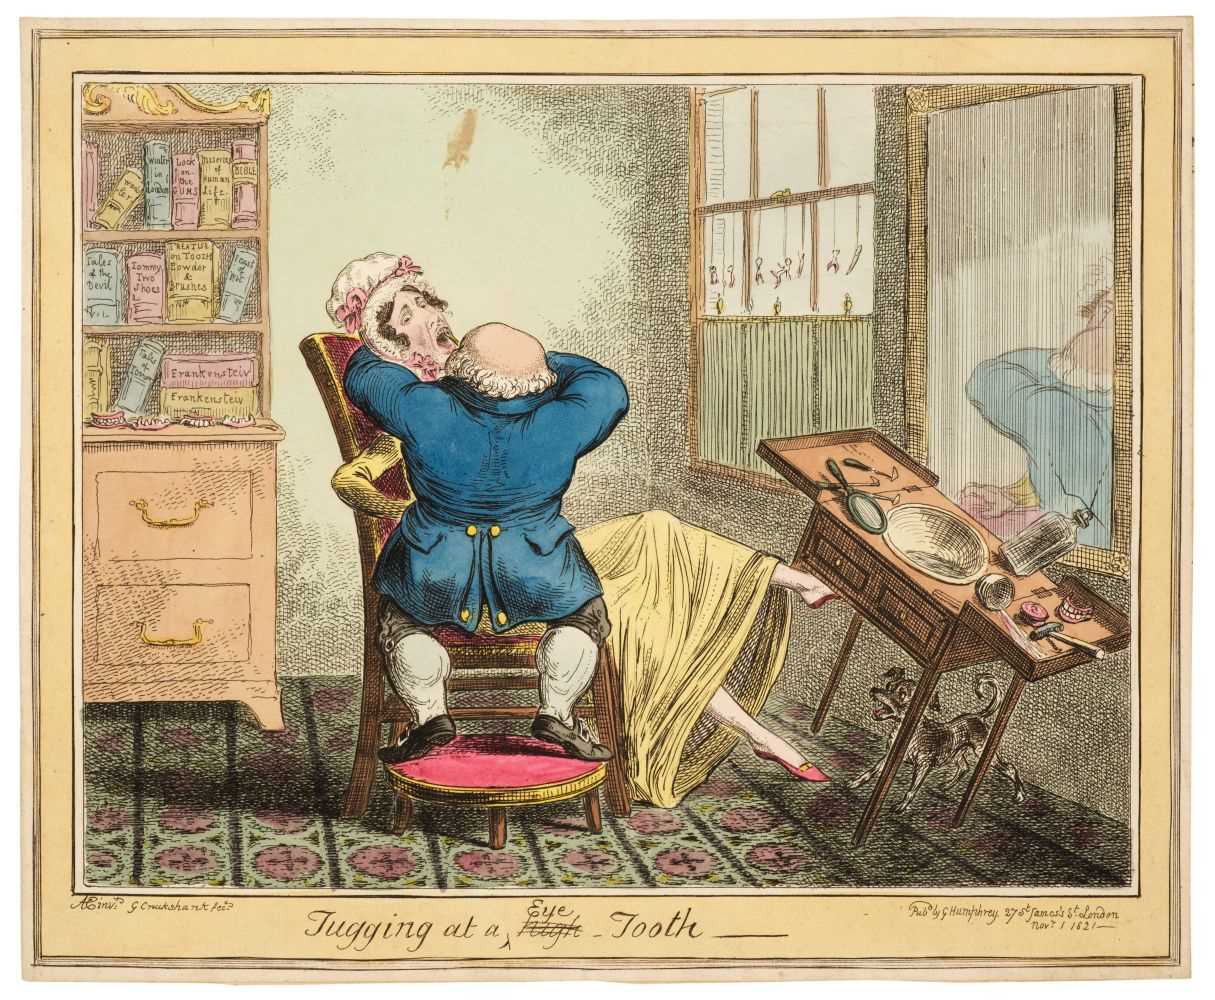 Lot 214 - Cruikshank (George). Tugging at a Eye Tooth, G. Humphrey, Nov. 1st. 1821